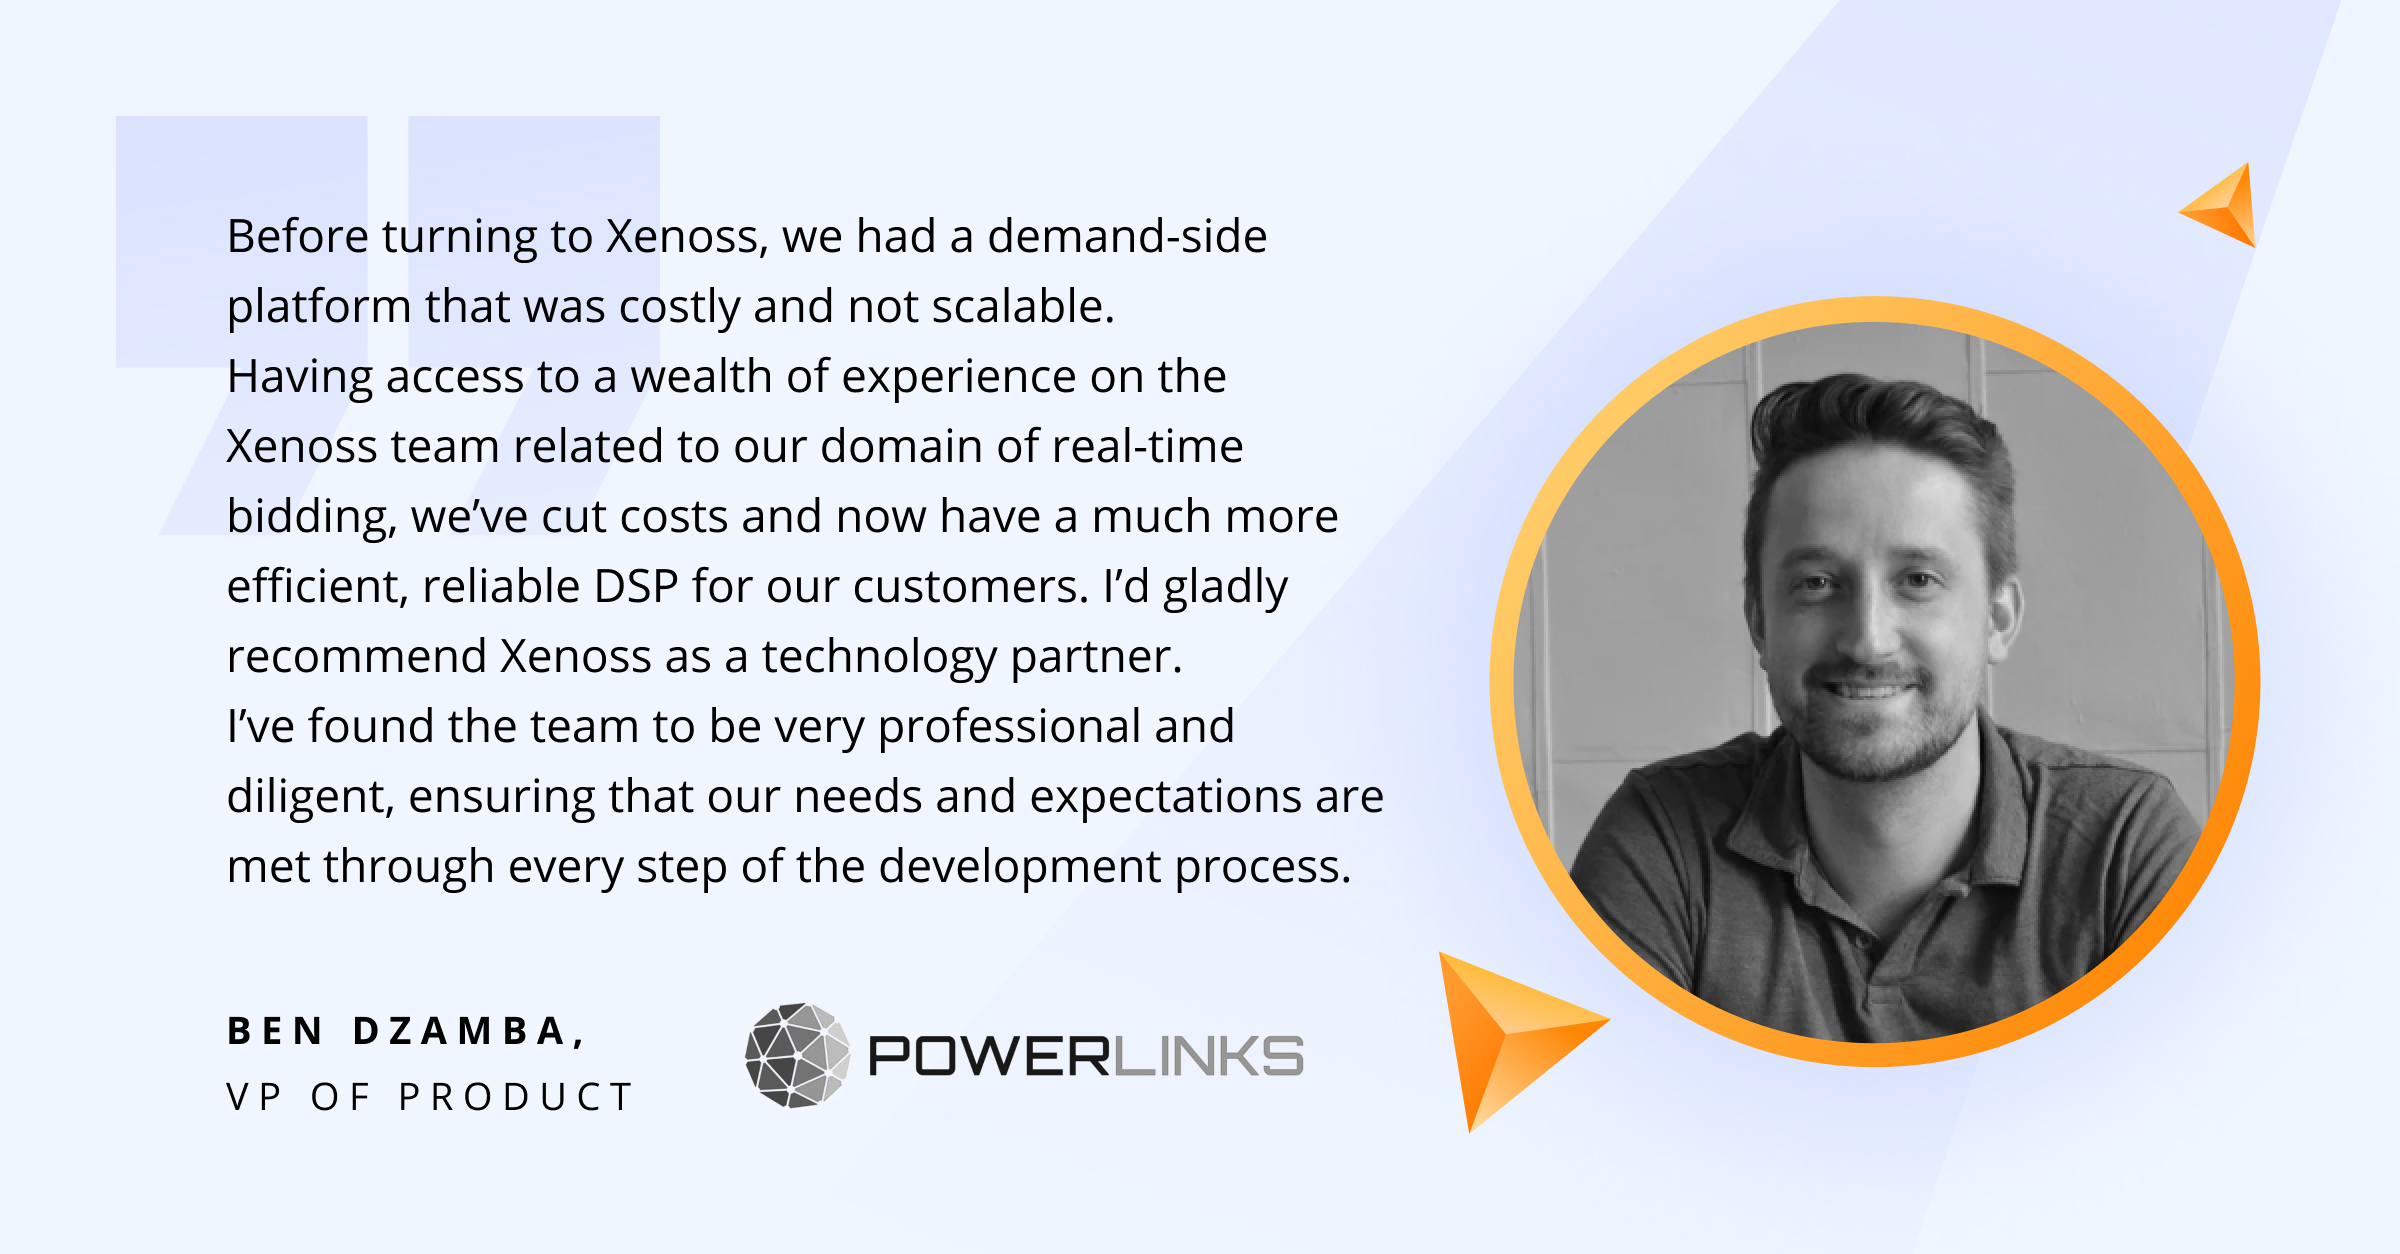 Ben Dzamba, VP of Product at Powerlinks, on collaboration with Xenoss | Xenoss Blog